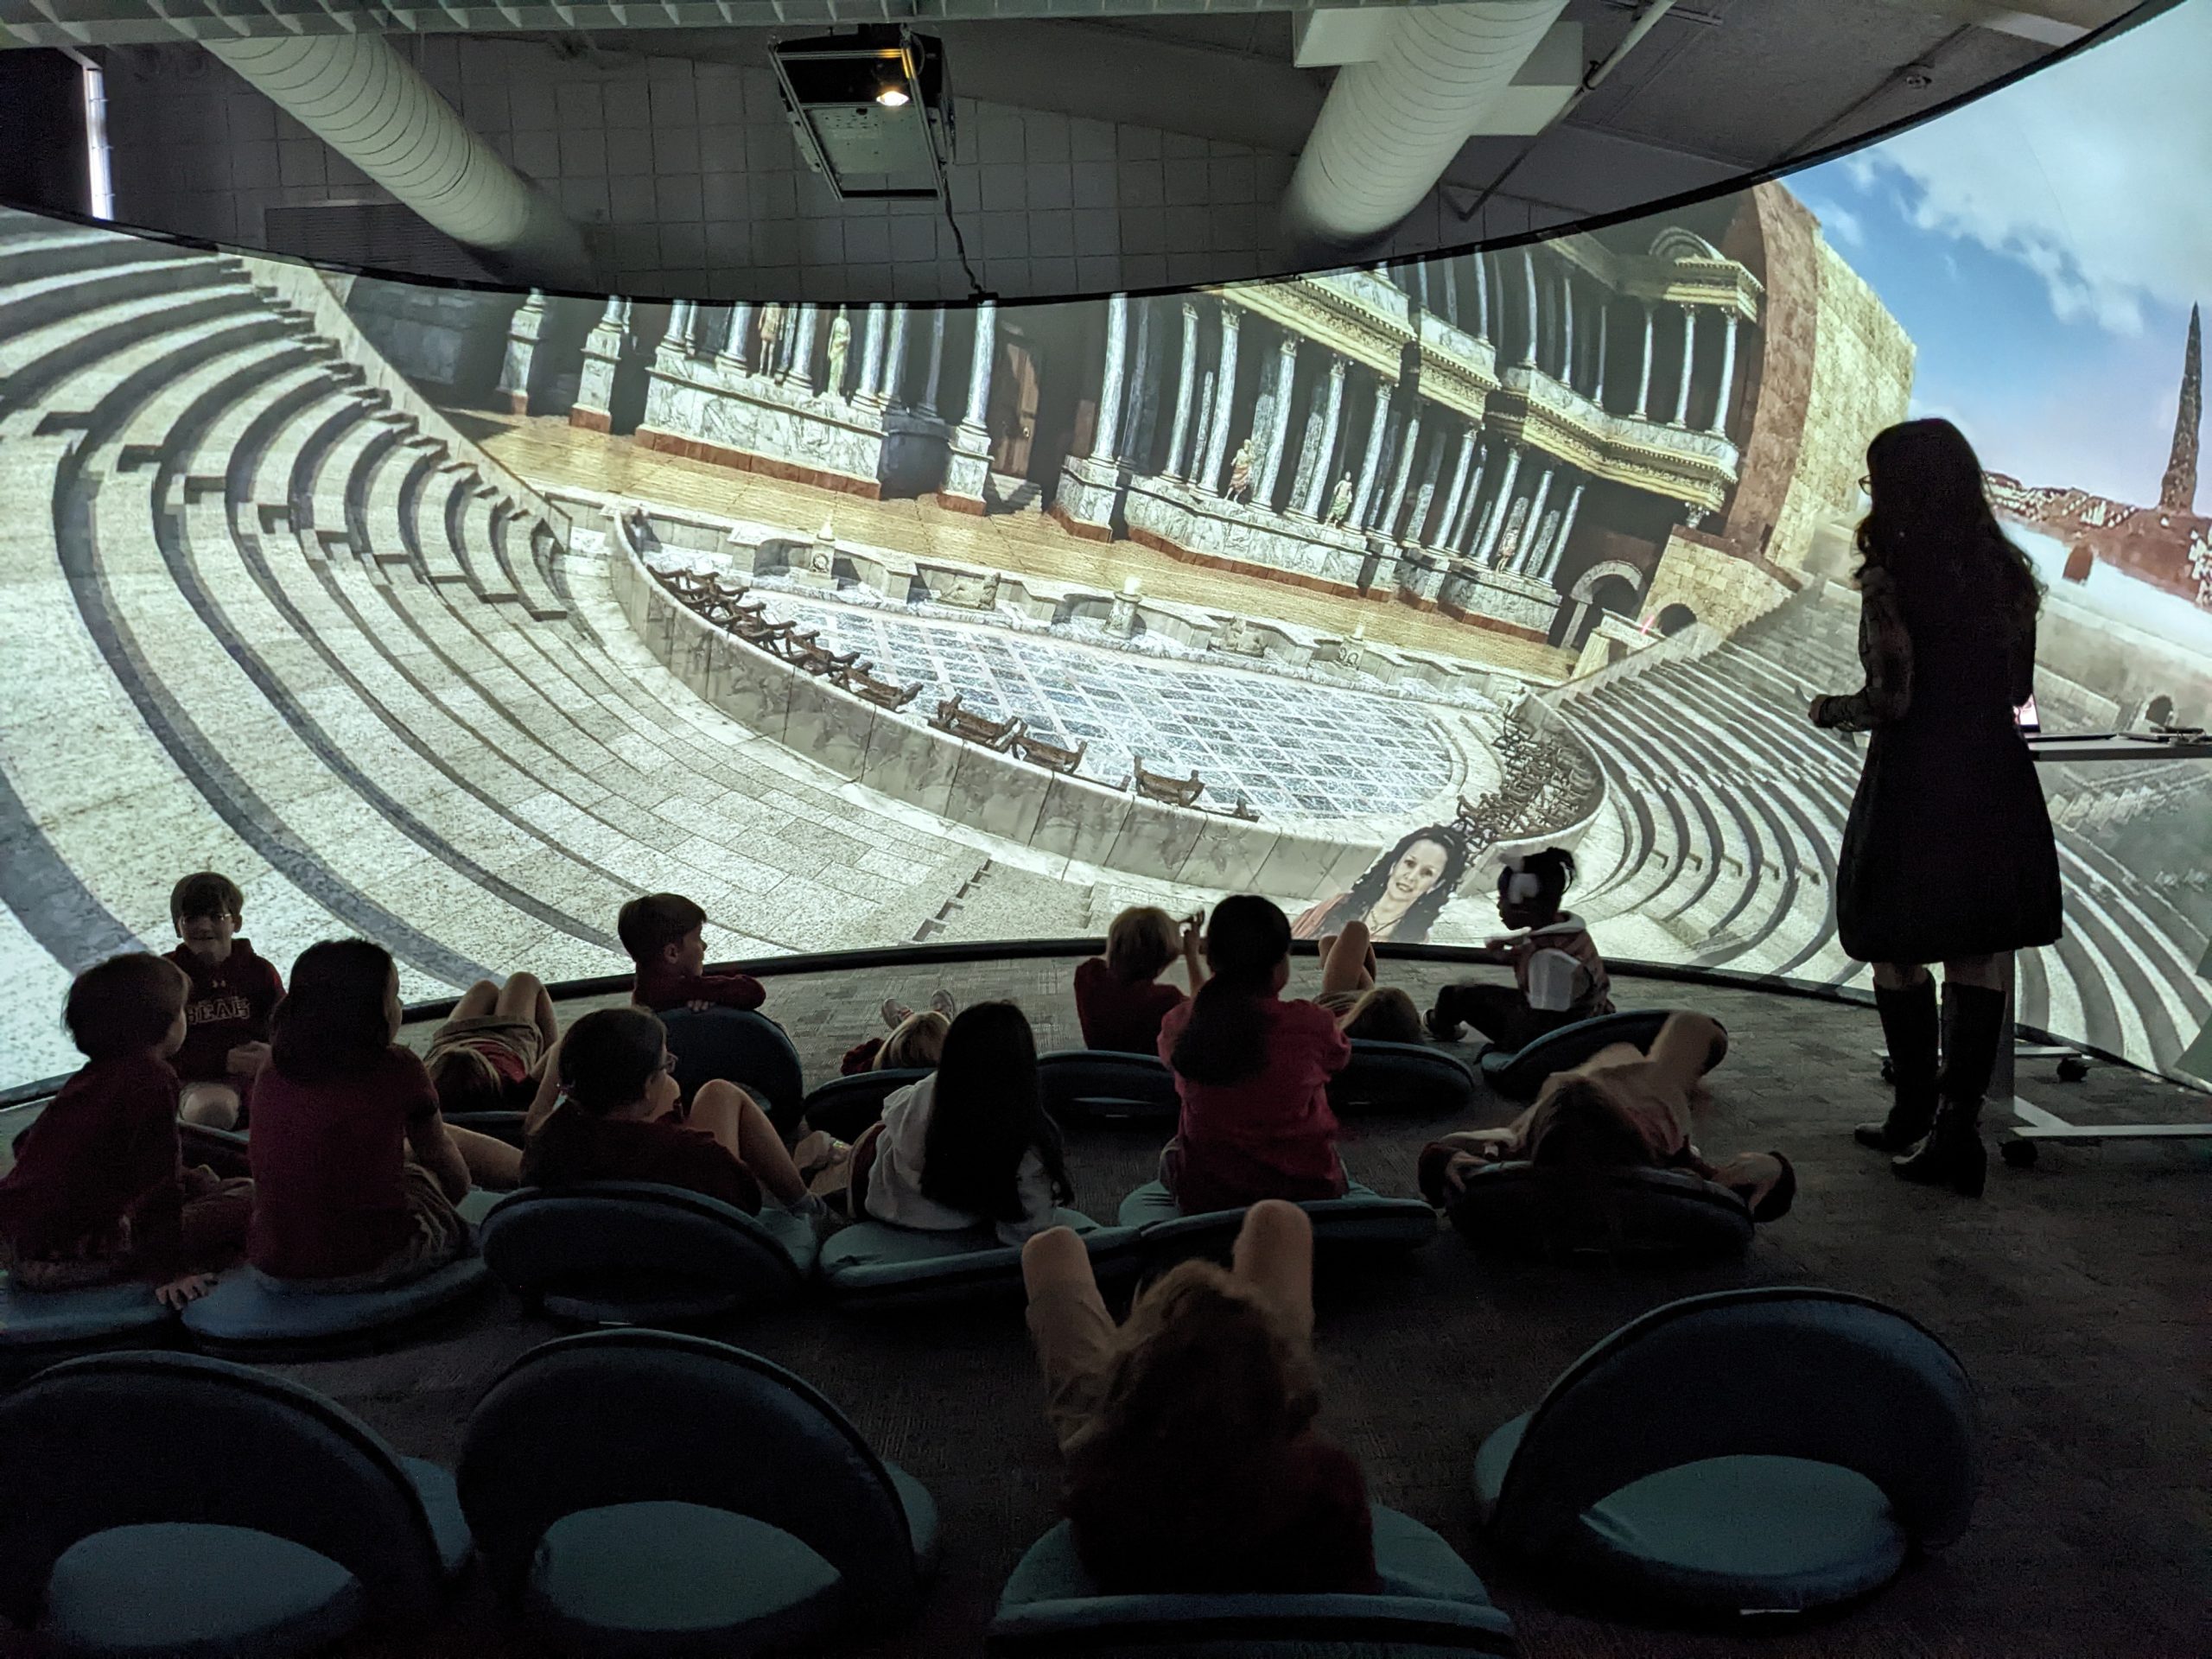 Elumenati GeoDome Panorama - classroom immersive learning environment at HIES in Atlanta